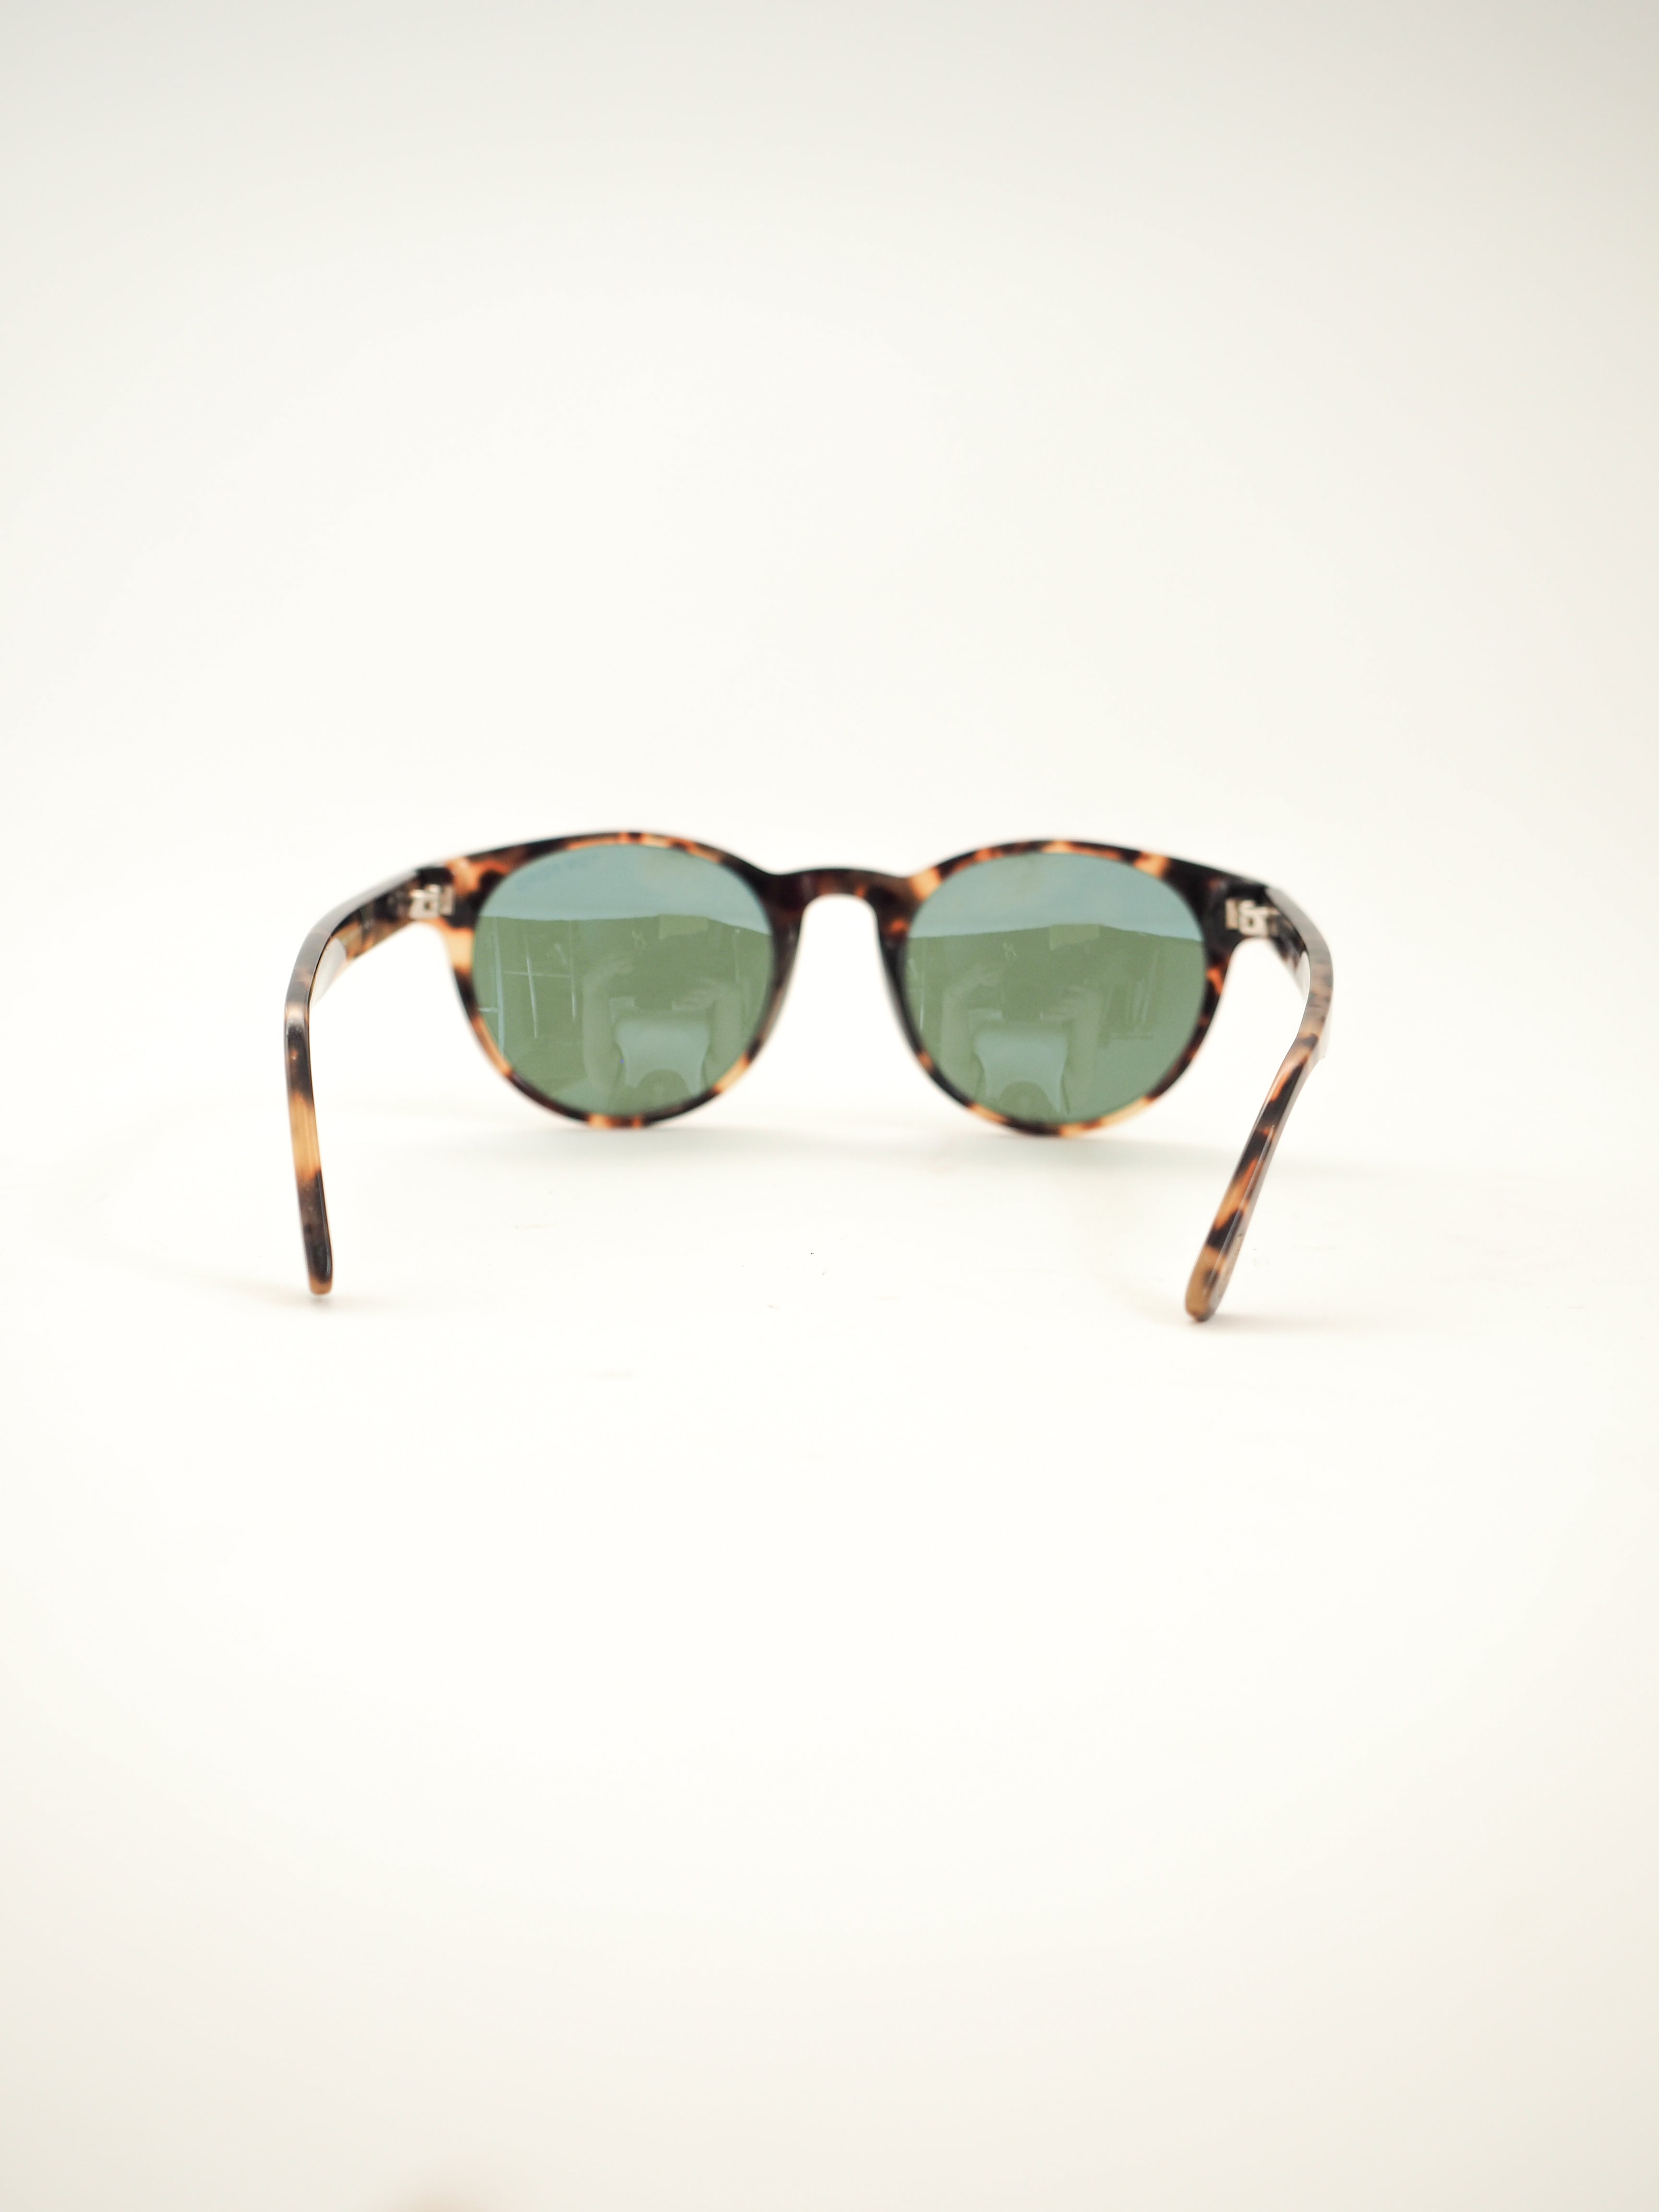 Tom Ford Tortoise Shell Round Sunglasses